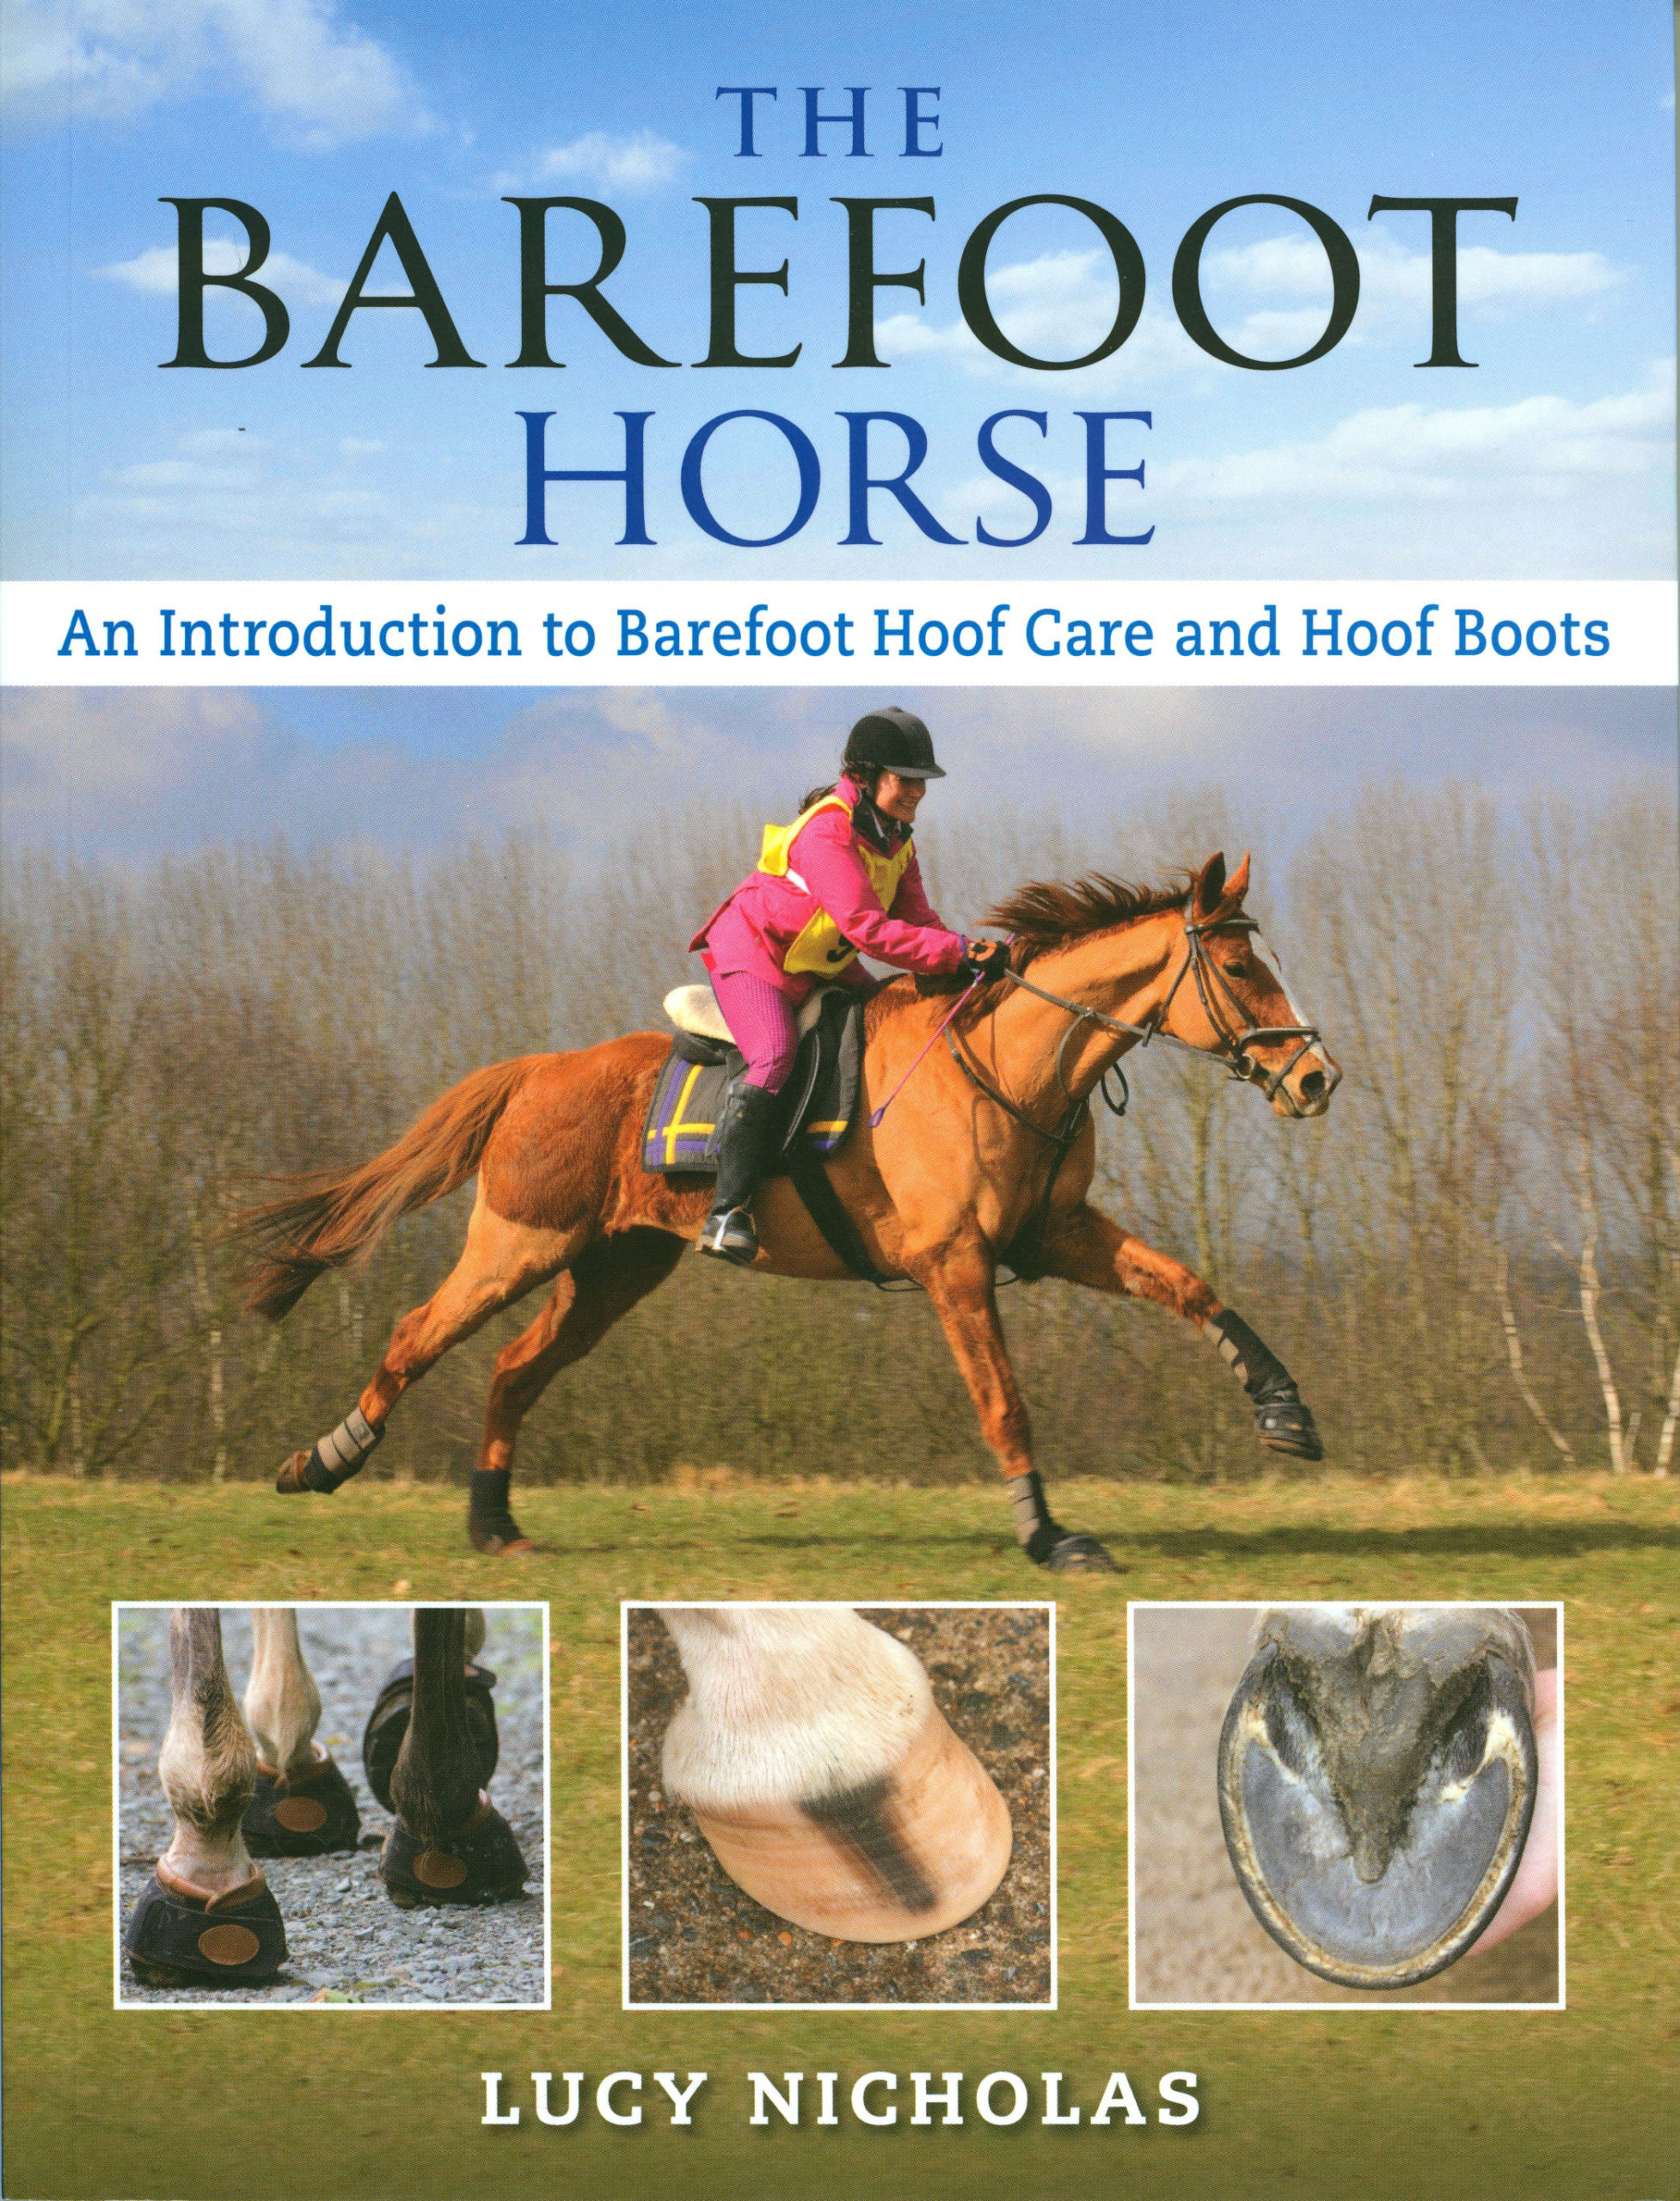 Media Critique: The Barefoot Horse